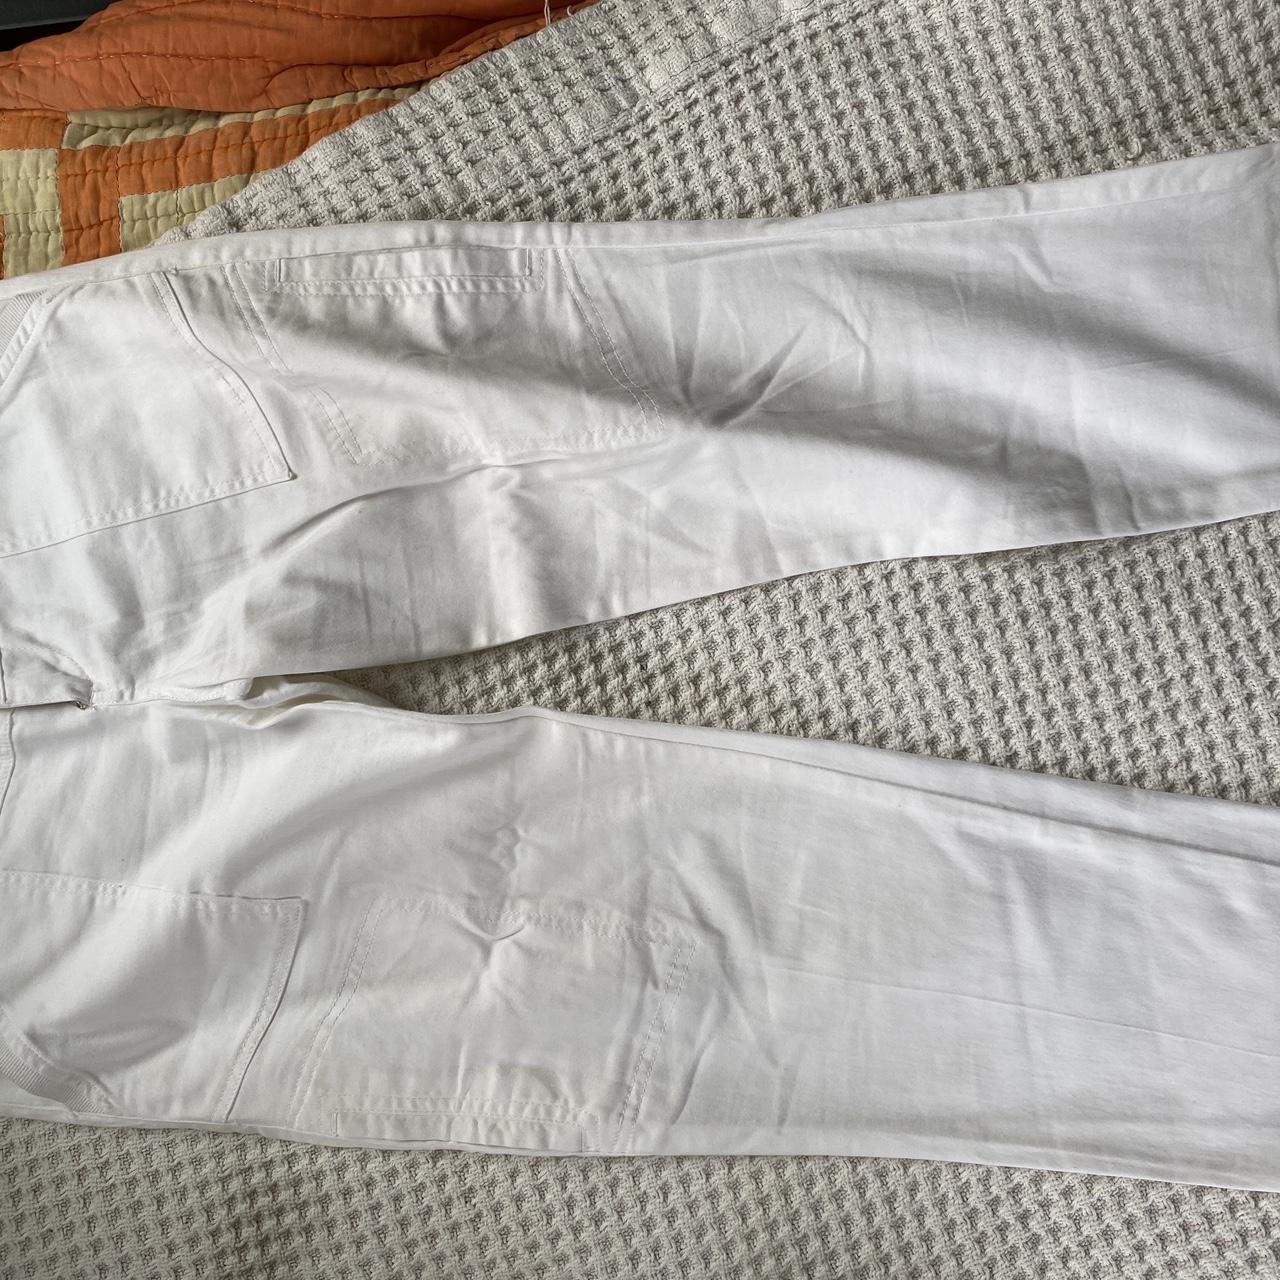 NorthCrest Capri Pants Size 14. Light beige color. - Depop